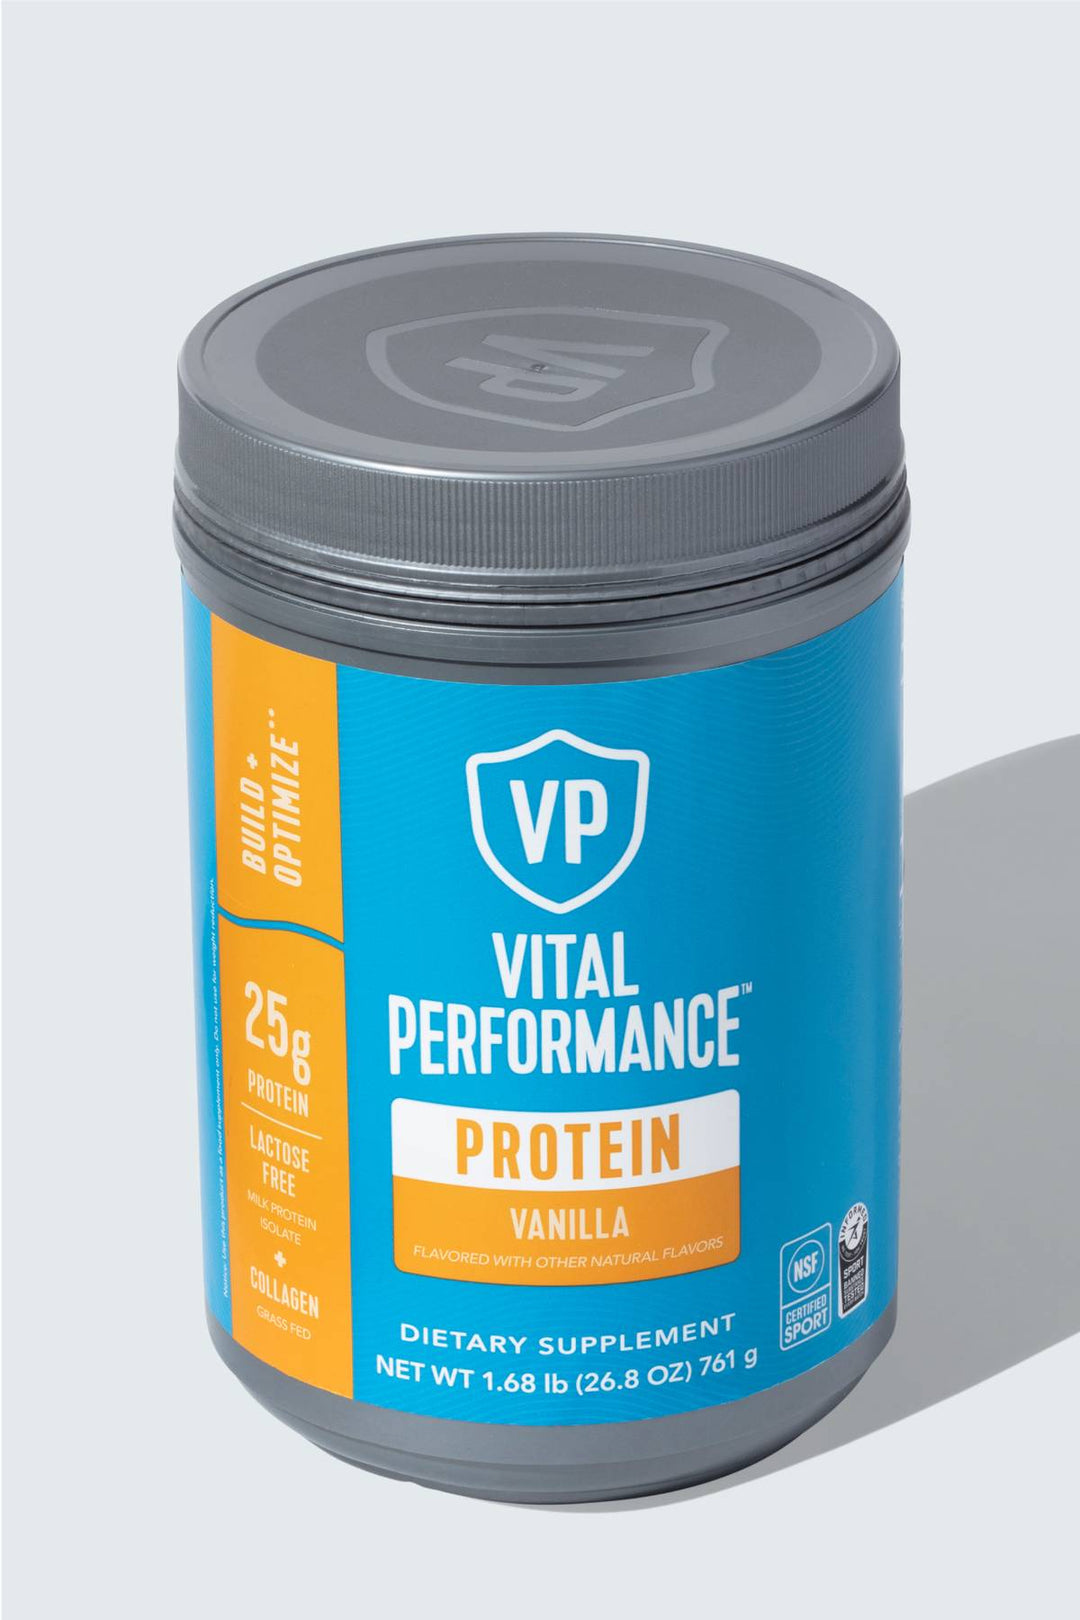 Vital Performance Protein Vanilla 26.8oz